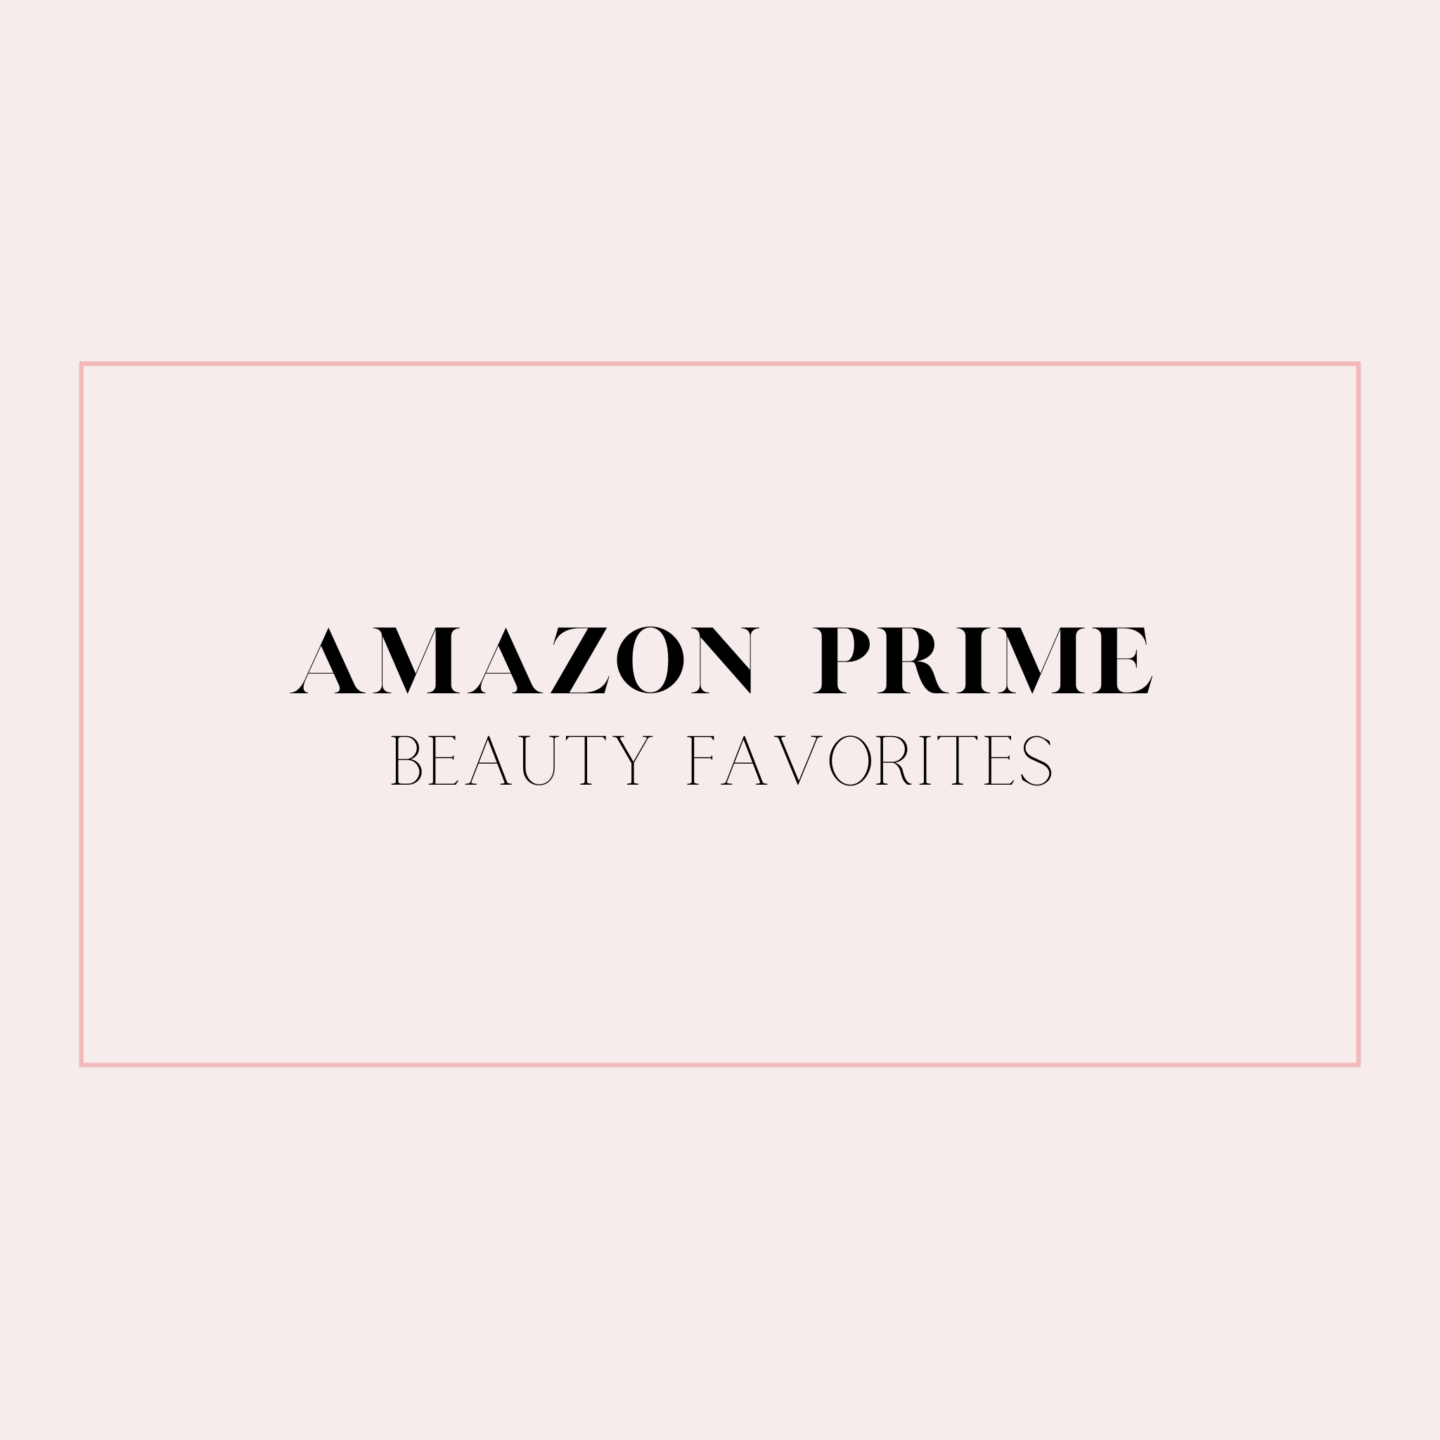 Amazon Prime Beauty Favorites